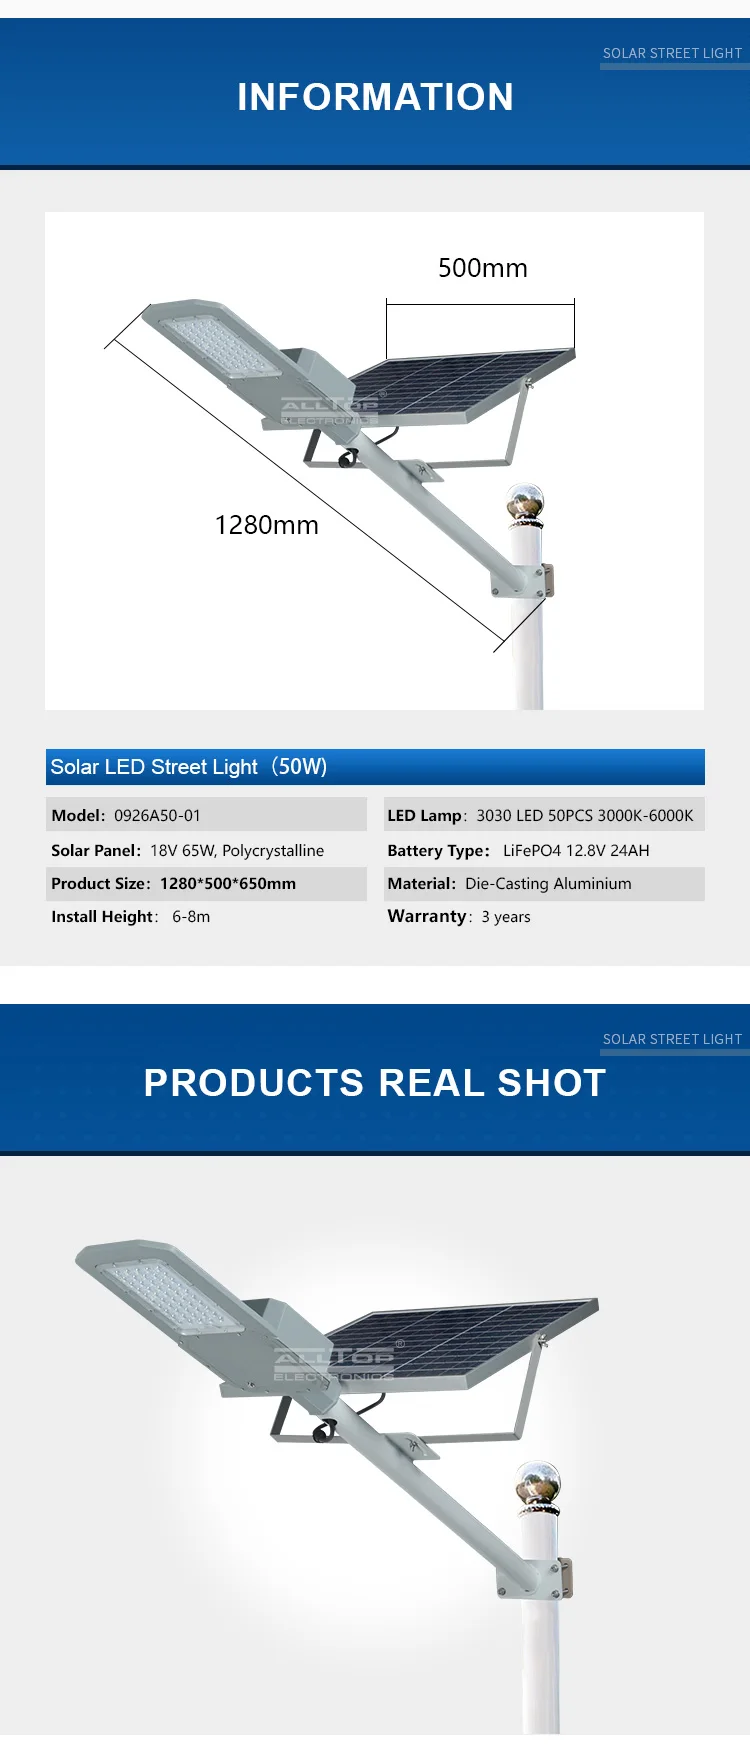 ALLTOP High quality outdoor lighting ip65 waterproof smd 50watt led solar street lamp